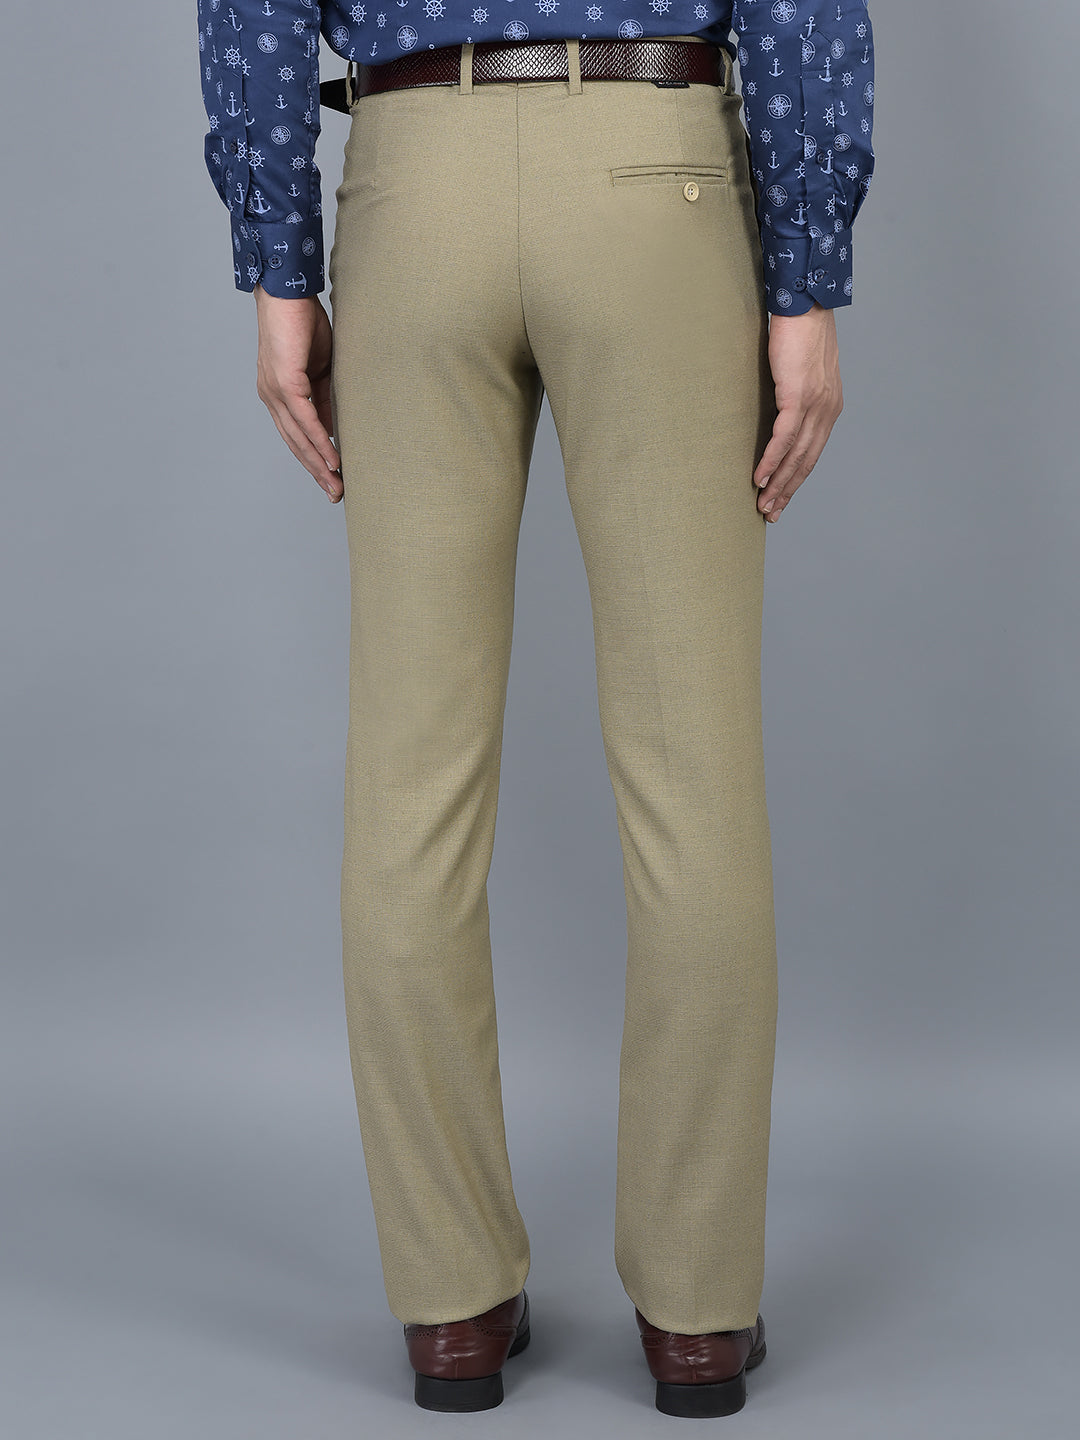 T the brand Mens Formal Flat Front Crease Trouser  Khaki  Tea  Tailoring